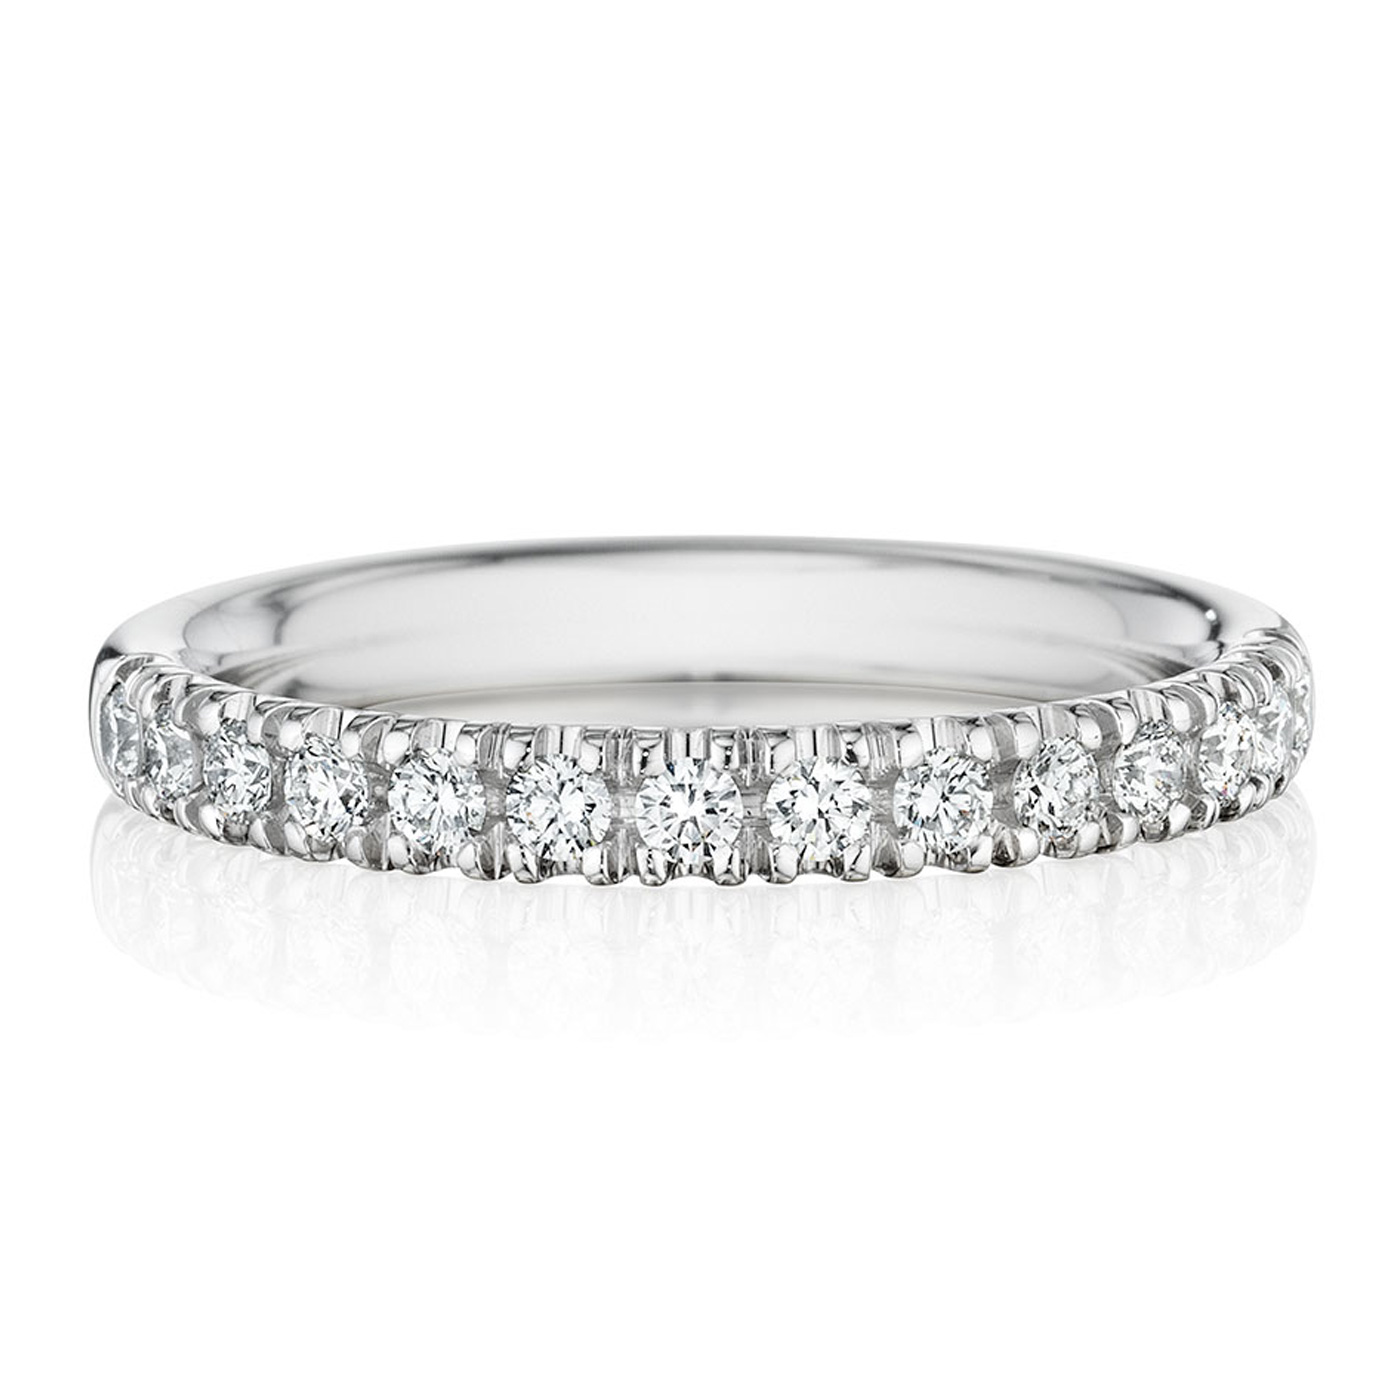 246955 Christian Bauer 18 Karat Diamond  Wedding Ring / Band